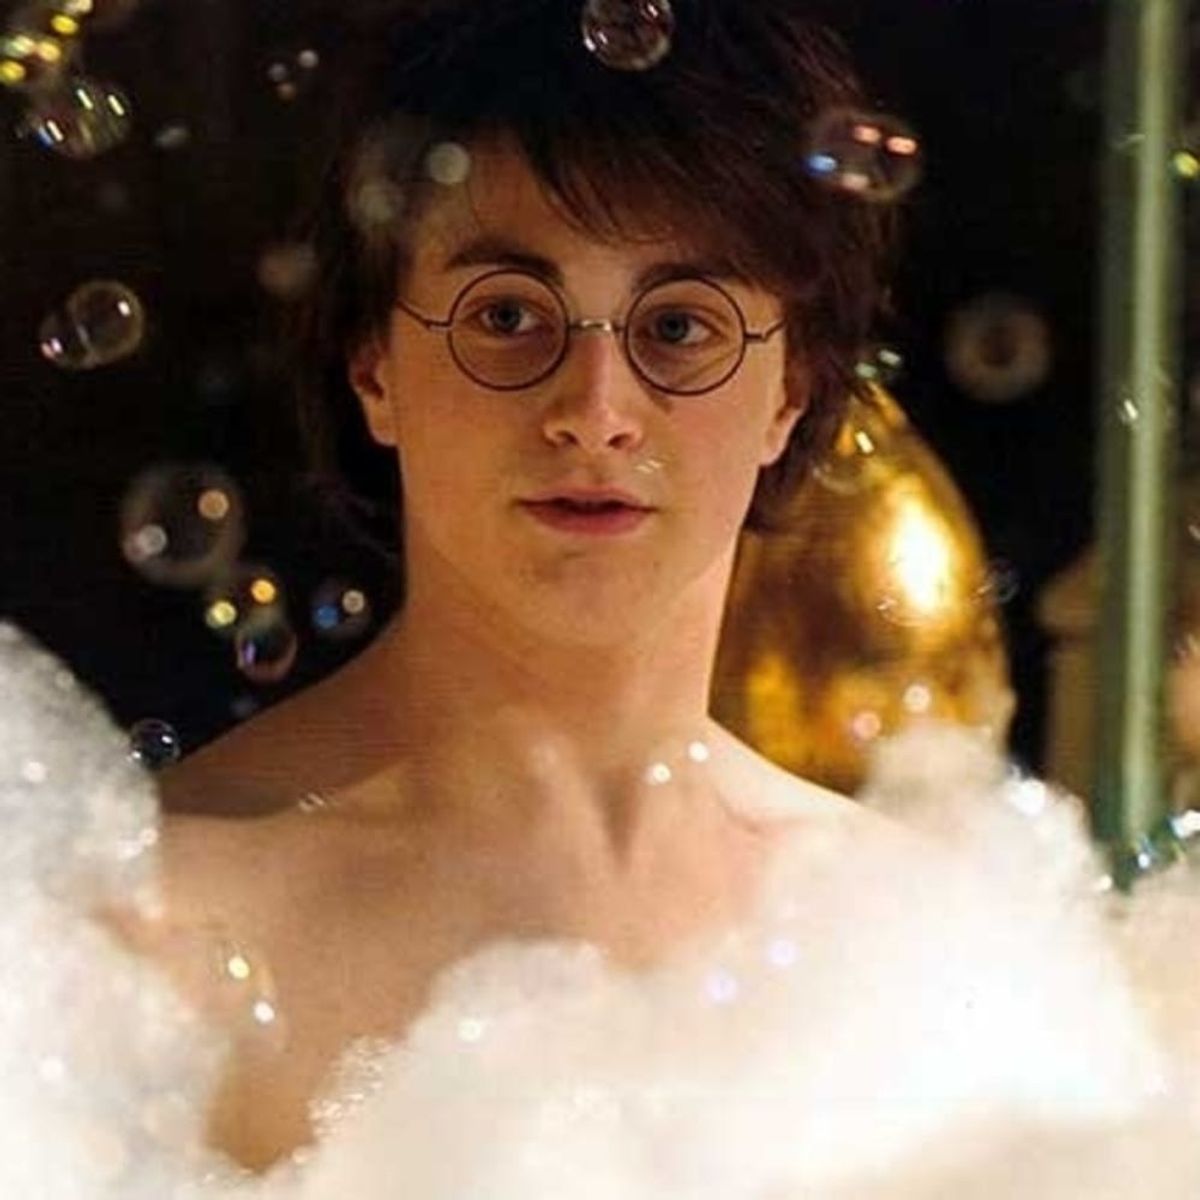 Lush’s Harry Potter-Inspired Bath Bomb Is Full of Dark Magic